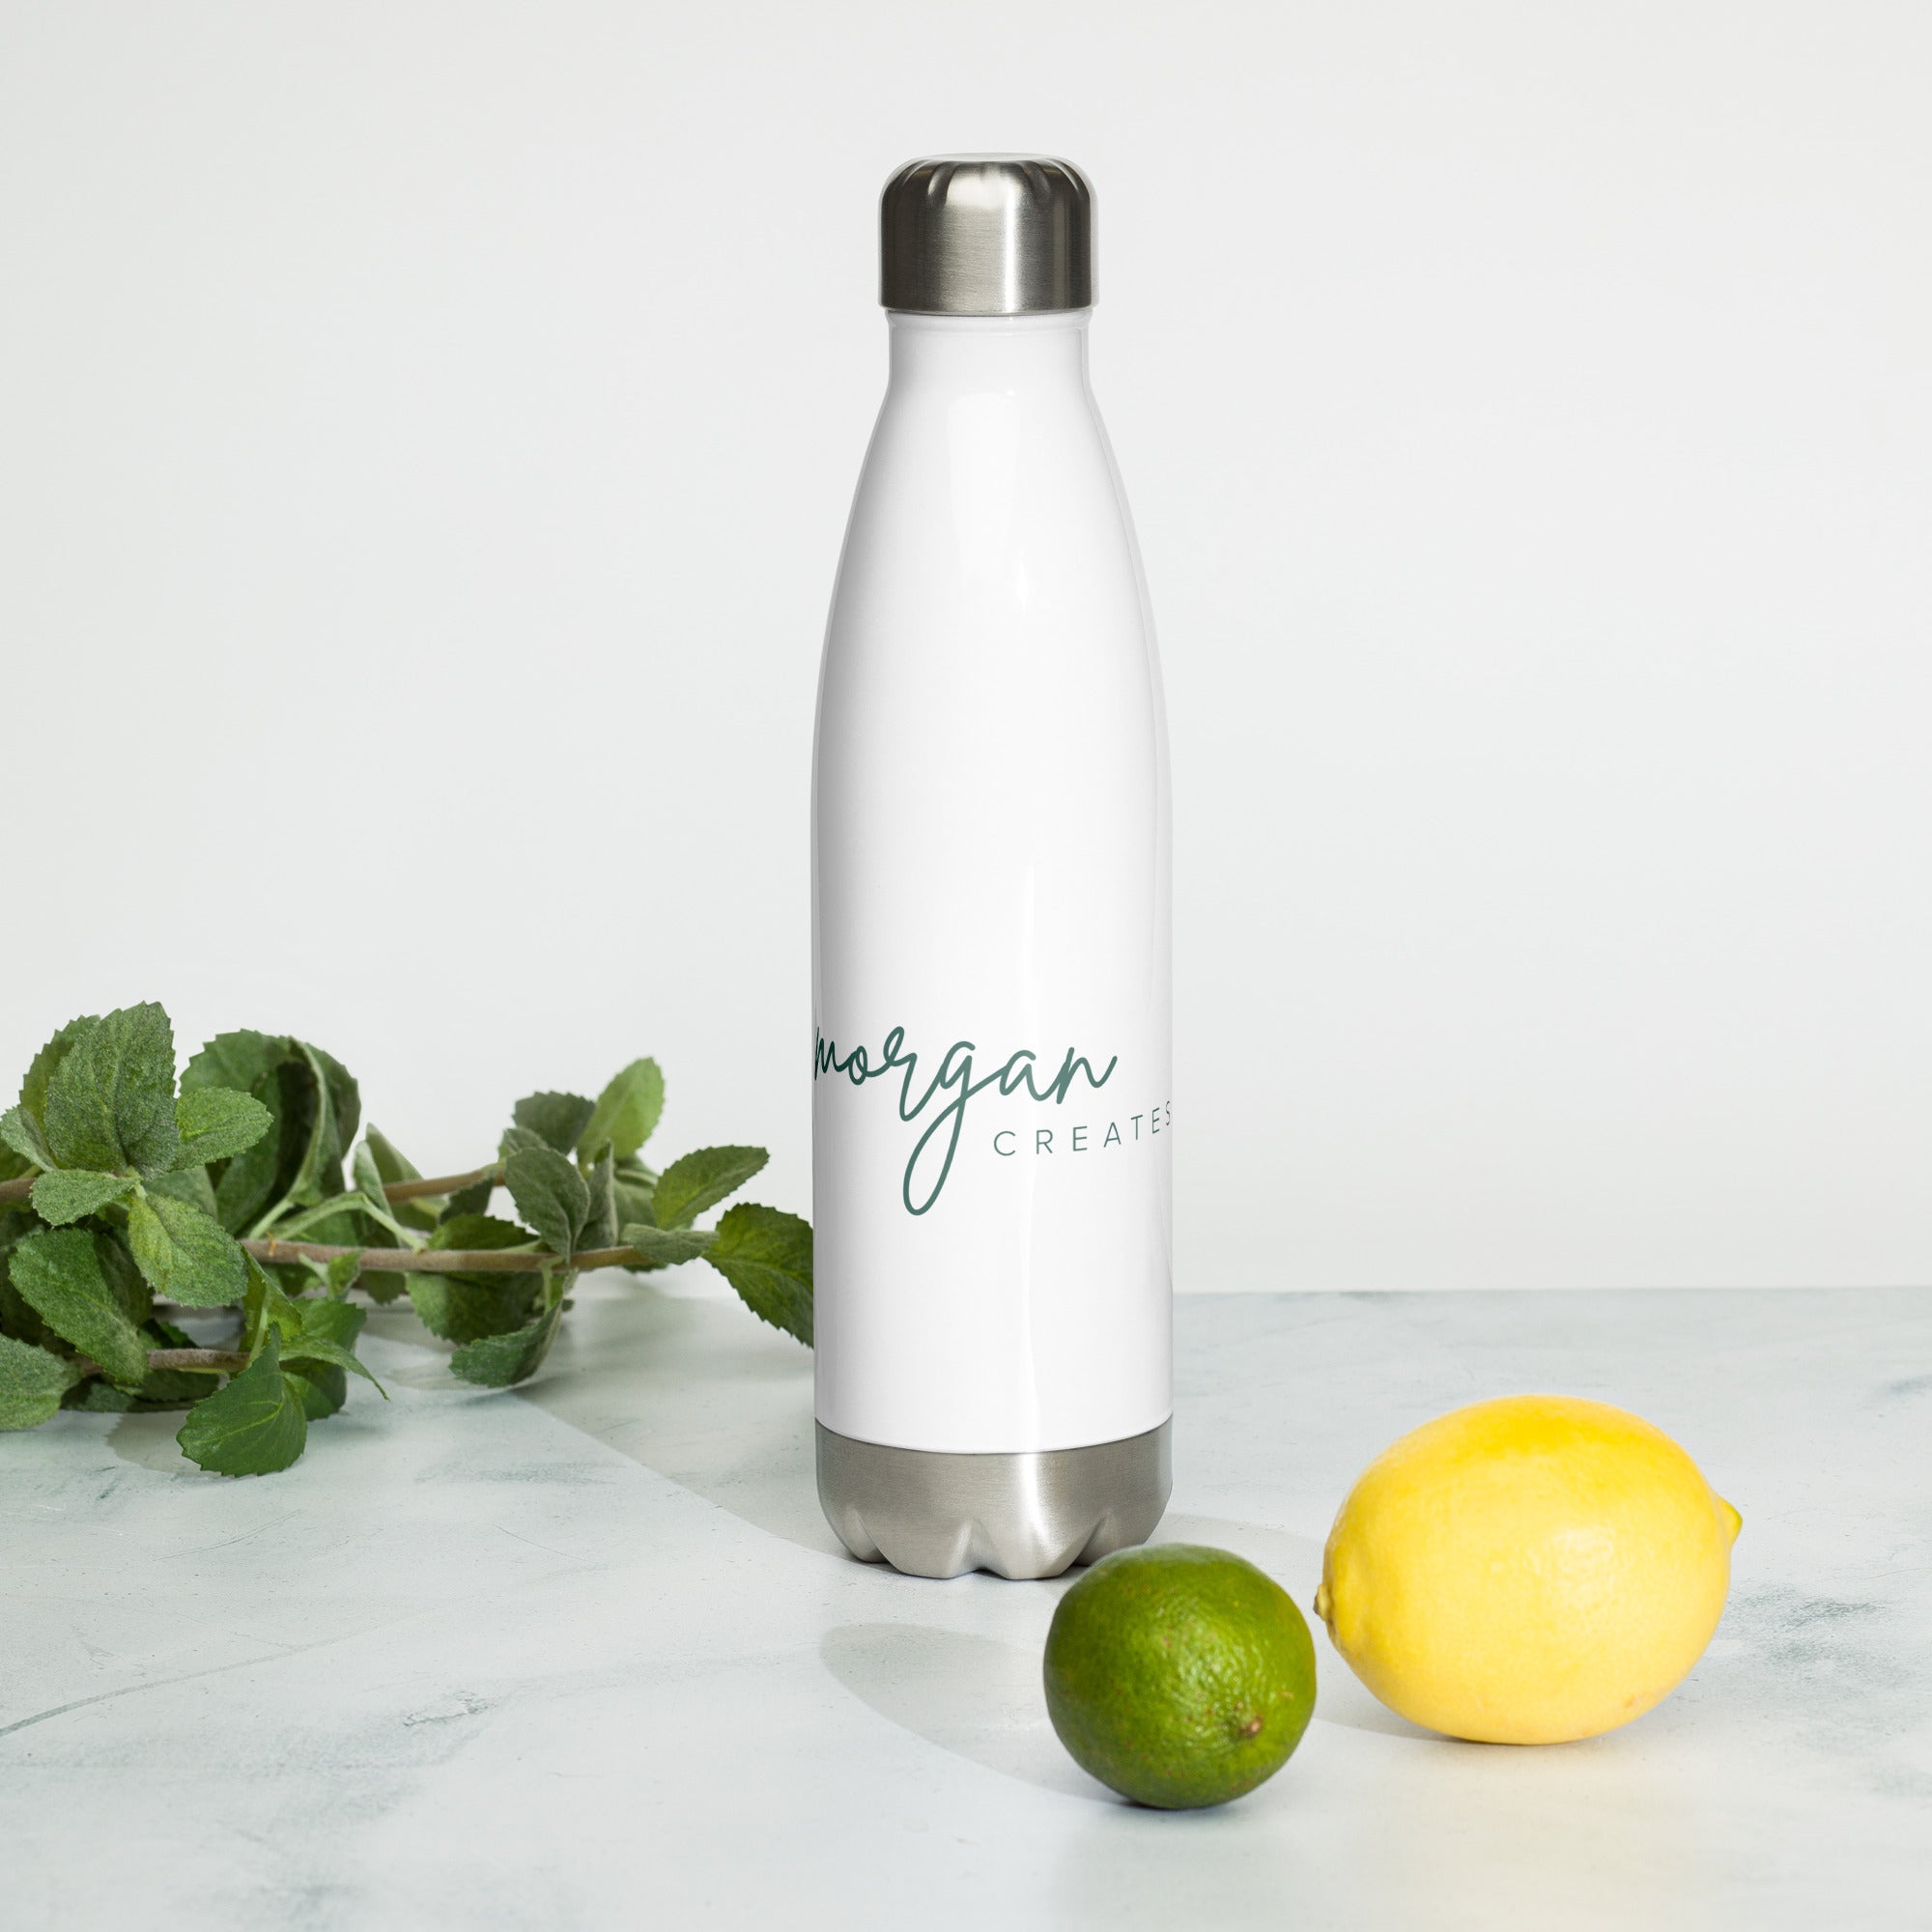 Morgan Creates Stainless Steel Water Bottle